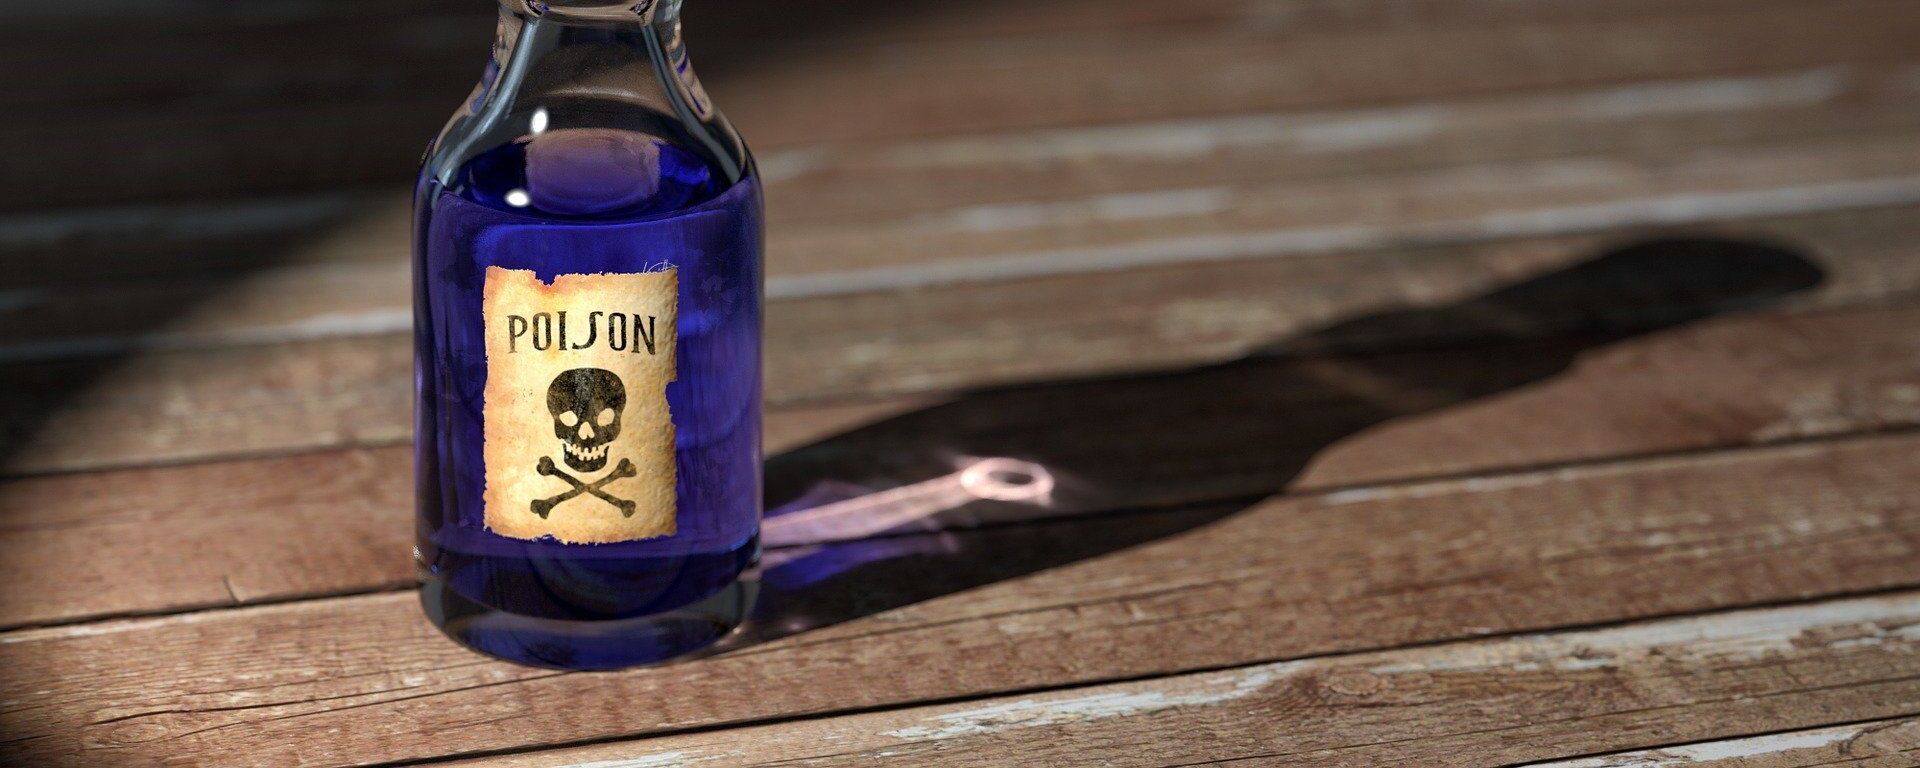 Small bottle of poison - Sputnik International, 1920, 16.06.2021